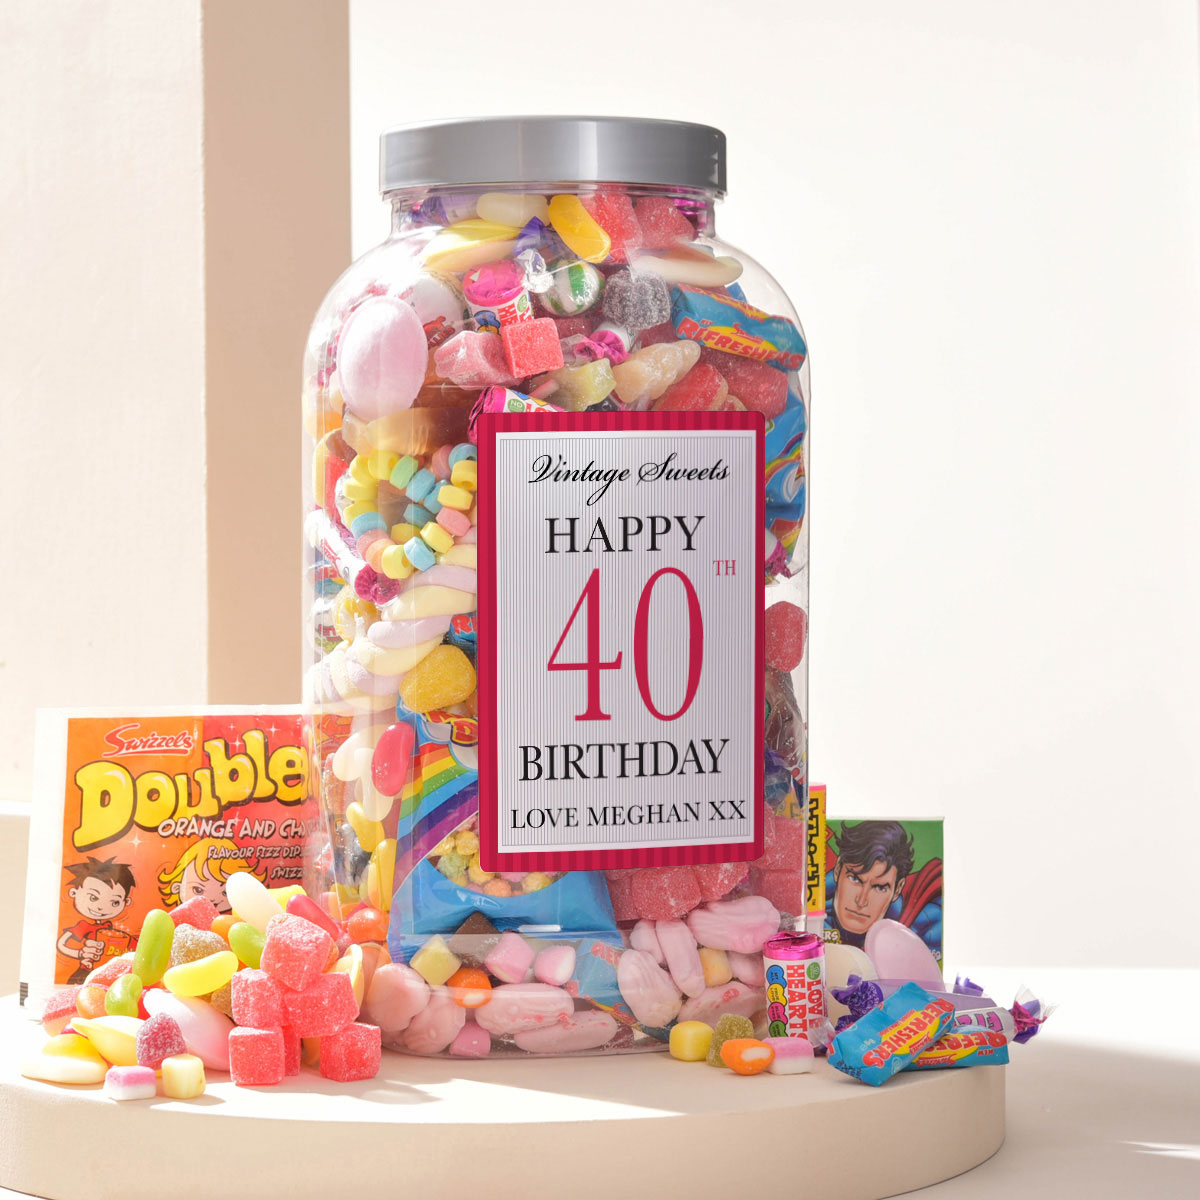 Personalised Retro Sweet Jar - Happy 40th Birthday